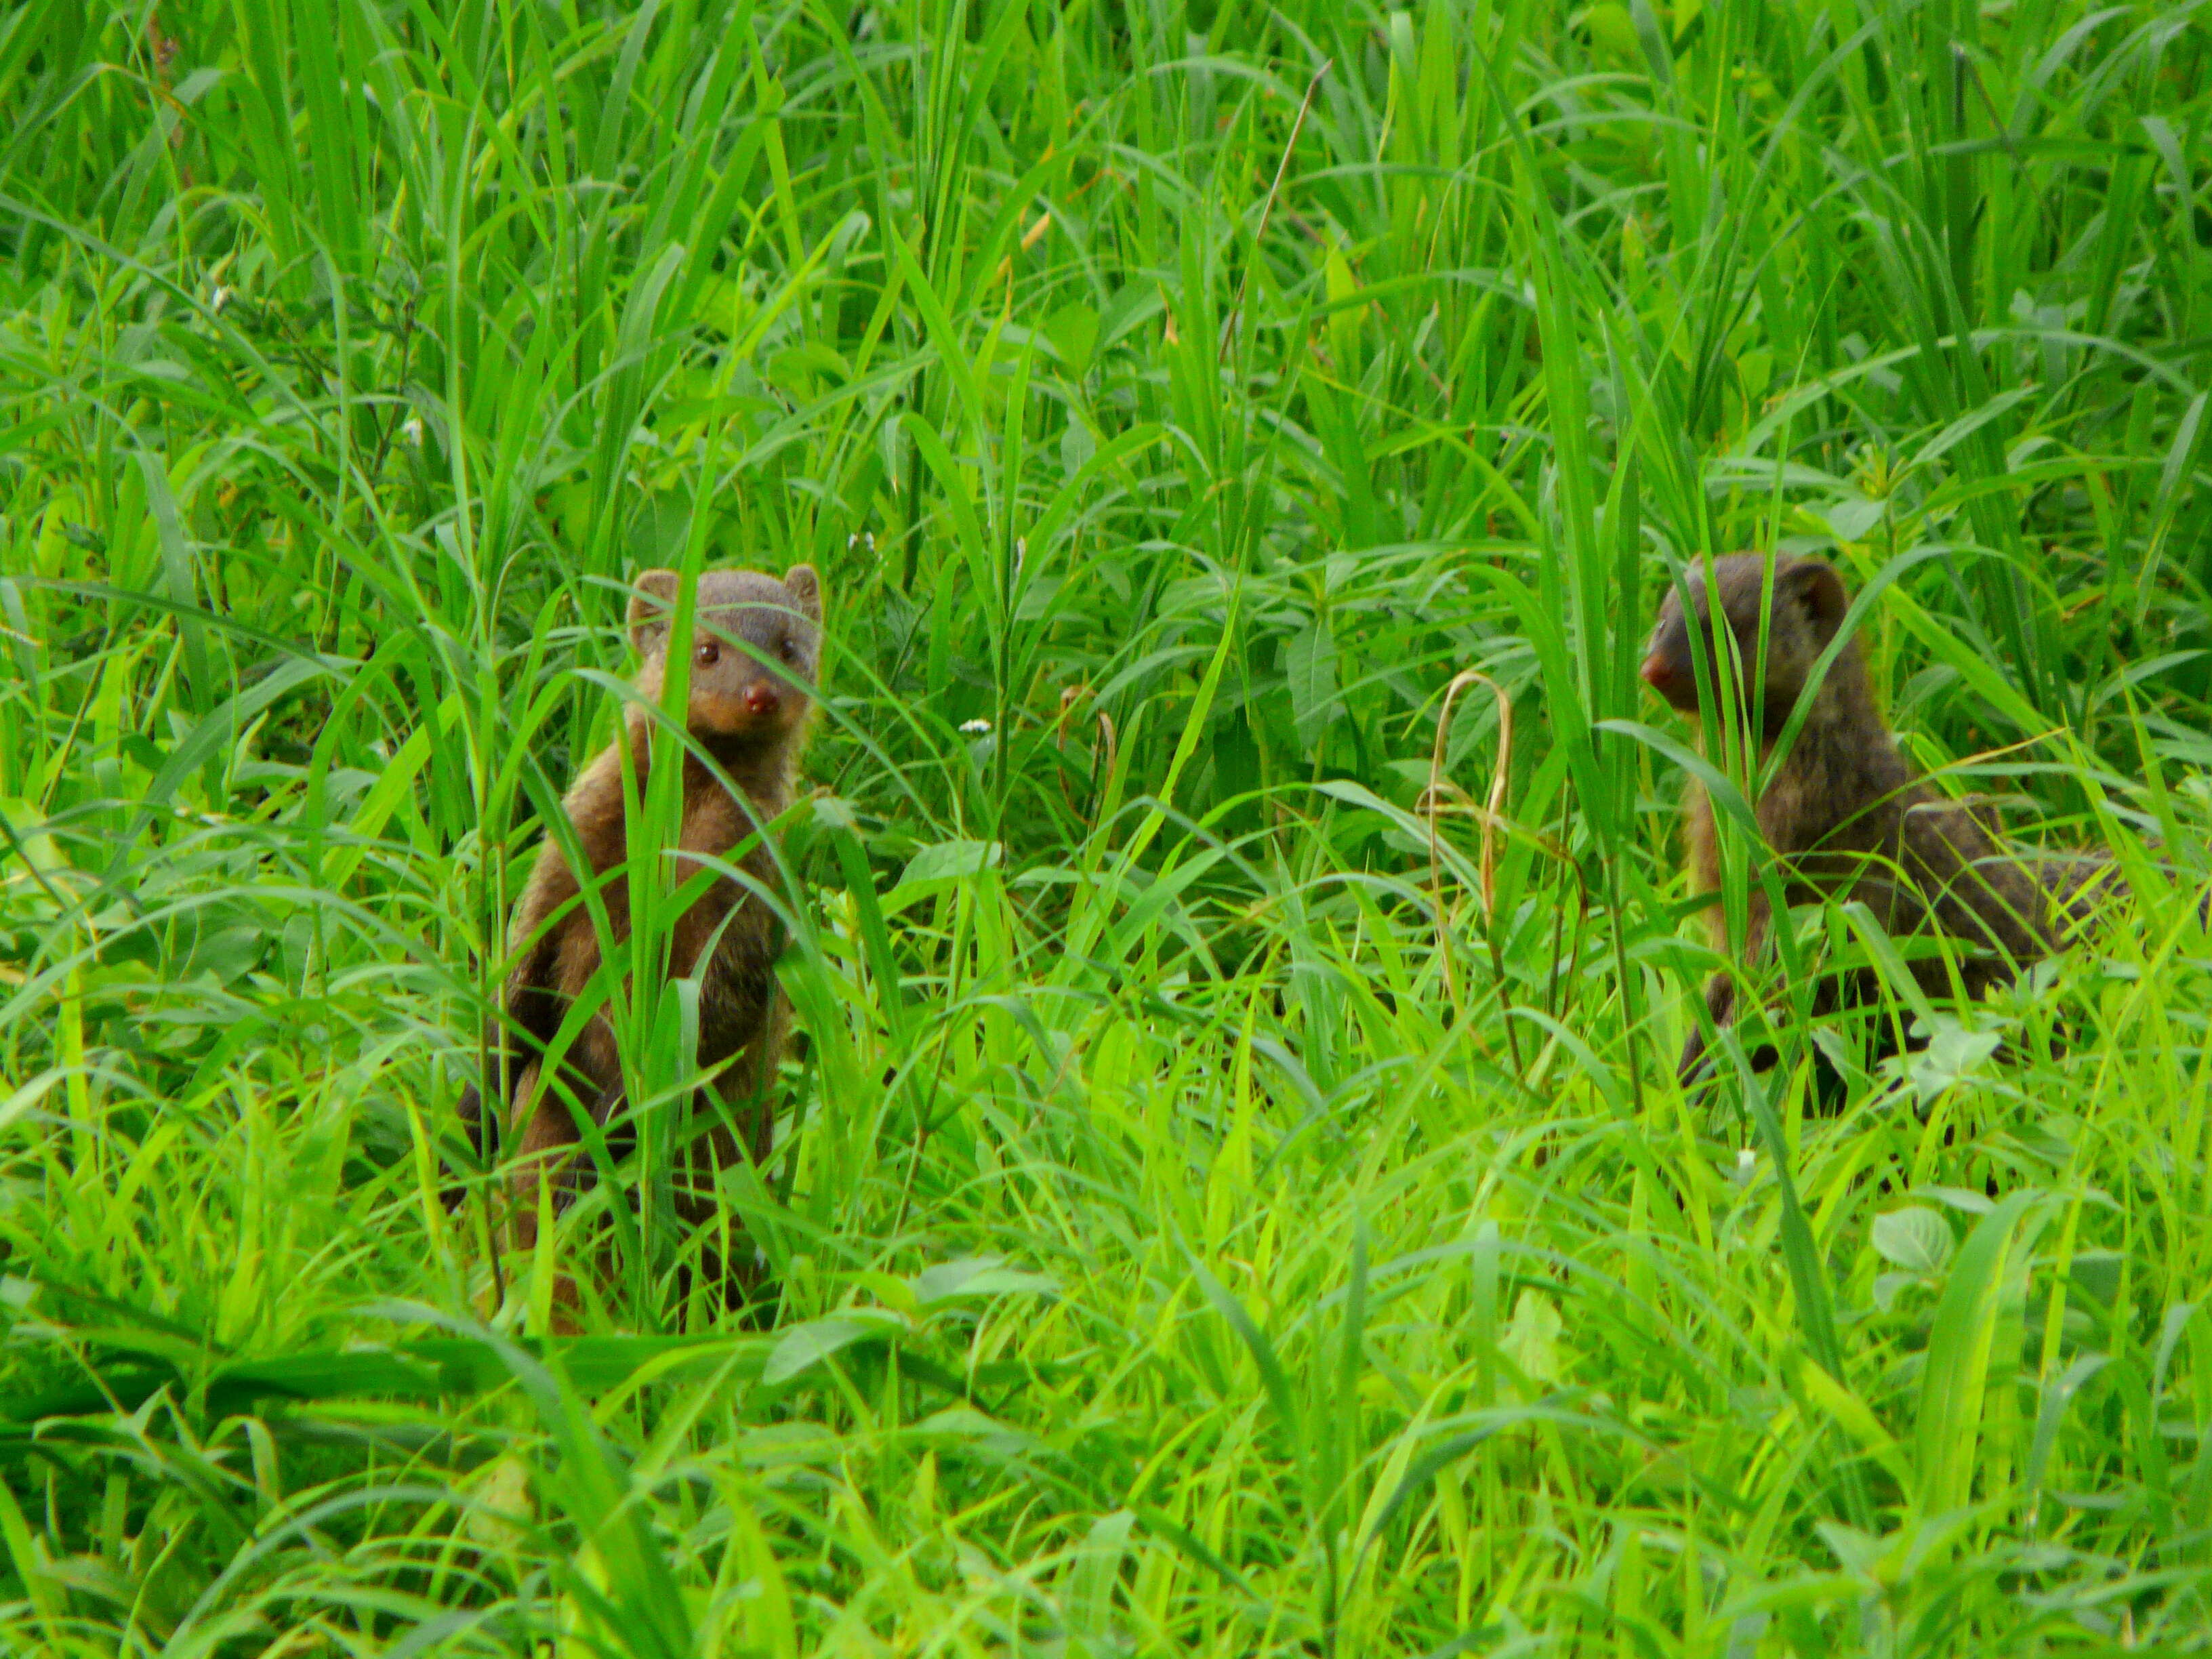 Image of Dwarf mongooses